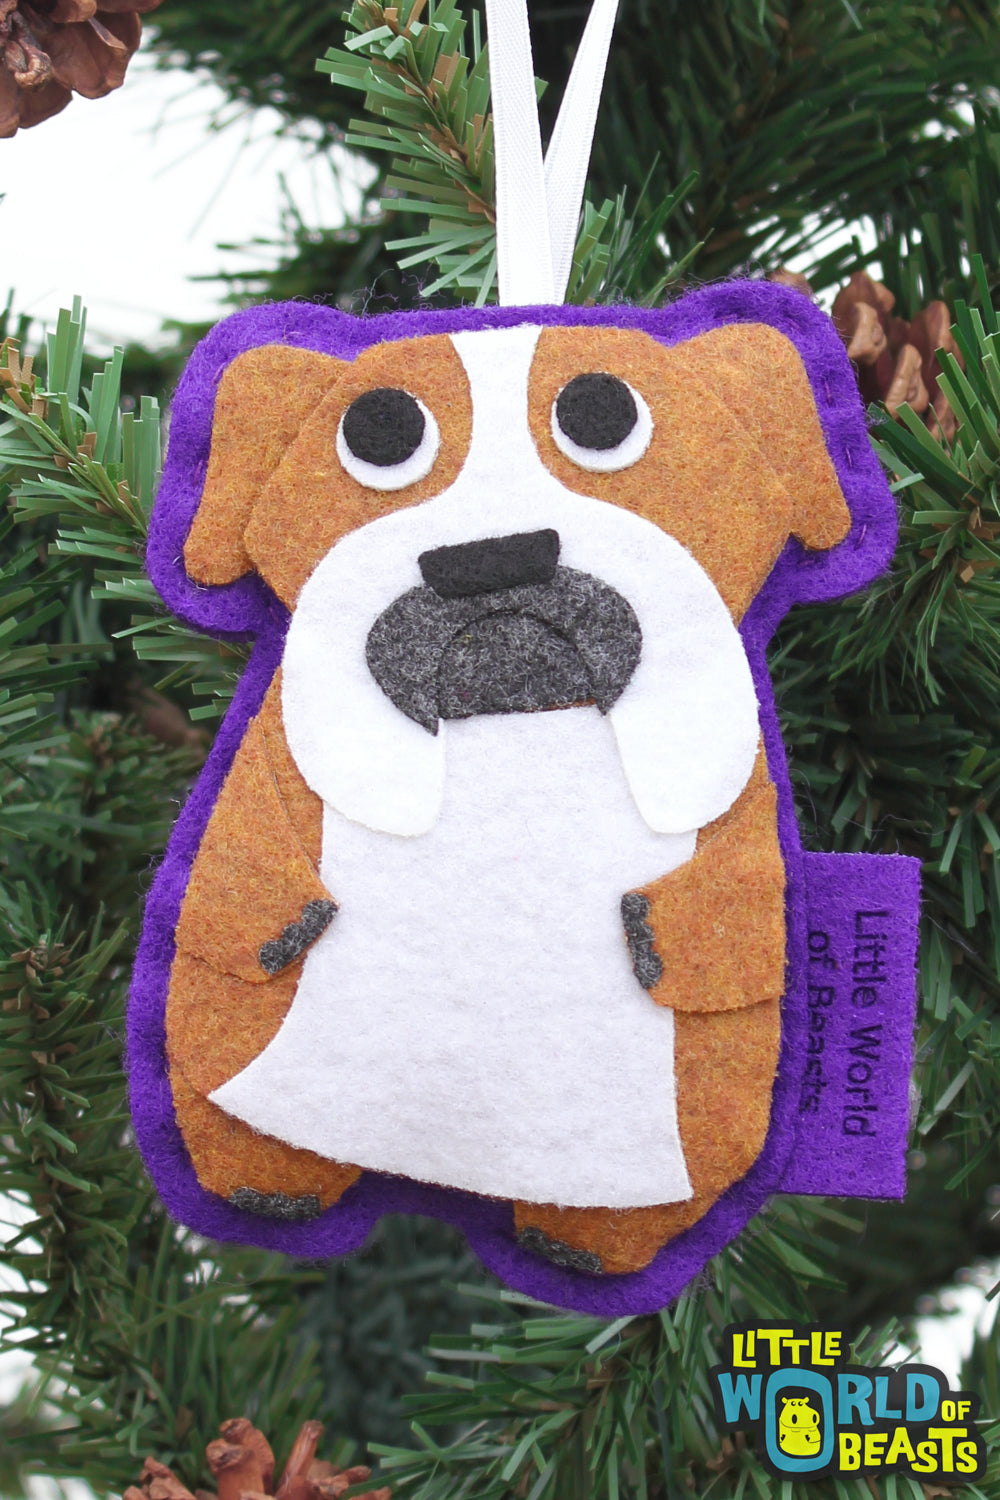 Personalized English Bulldog Ornament